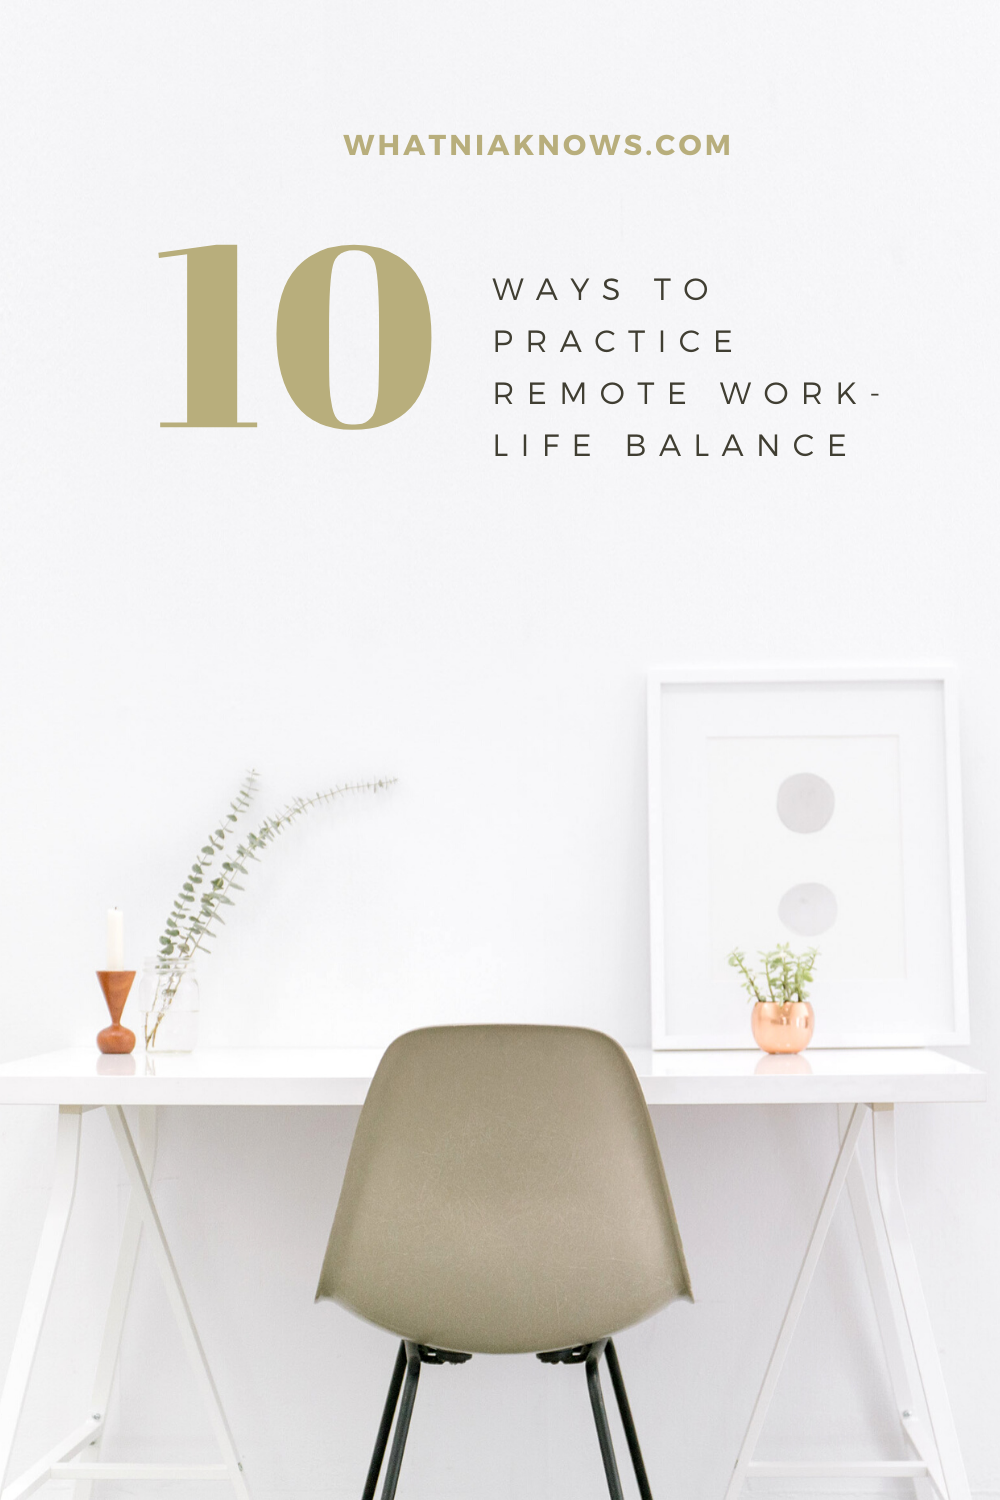 10 Ways to Practice Remote Work-Life Balance